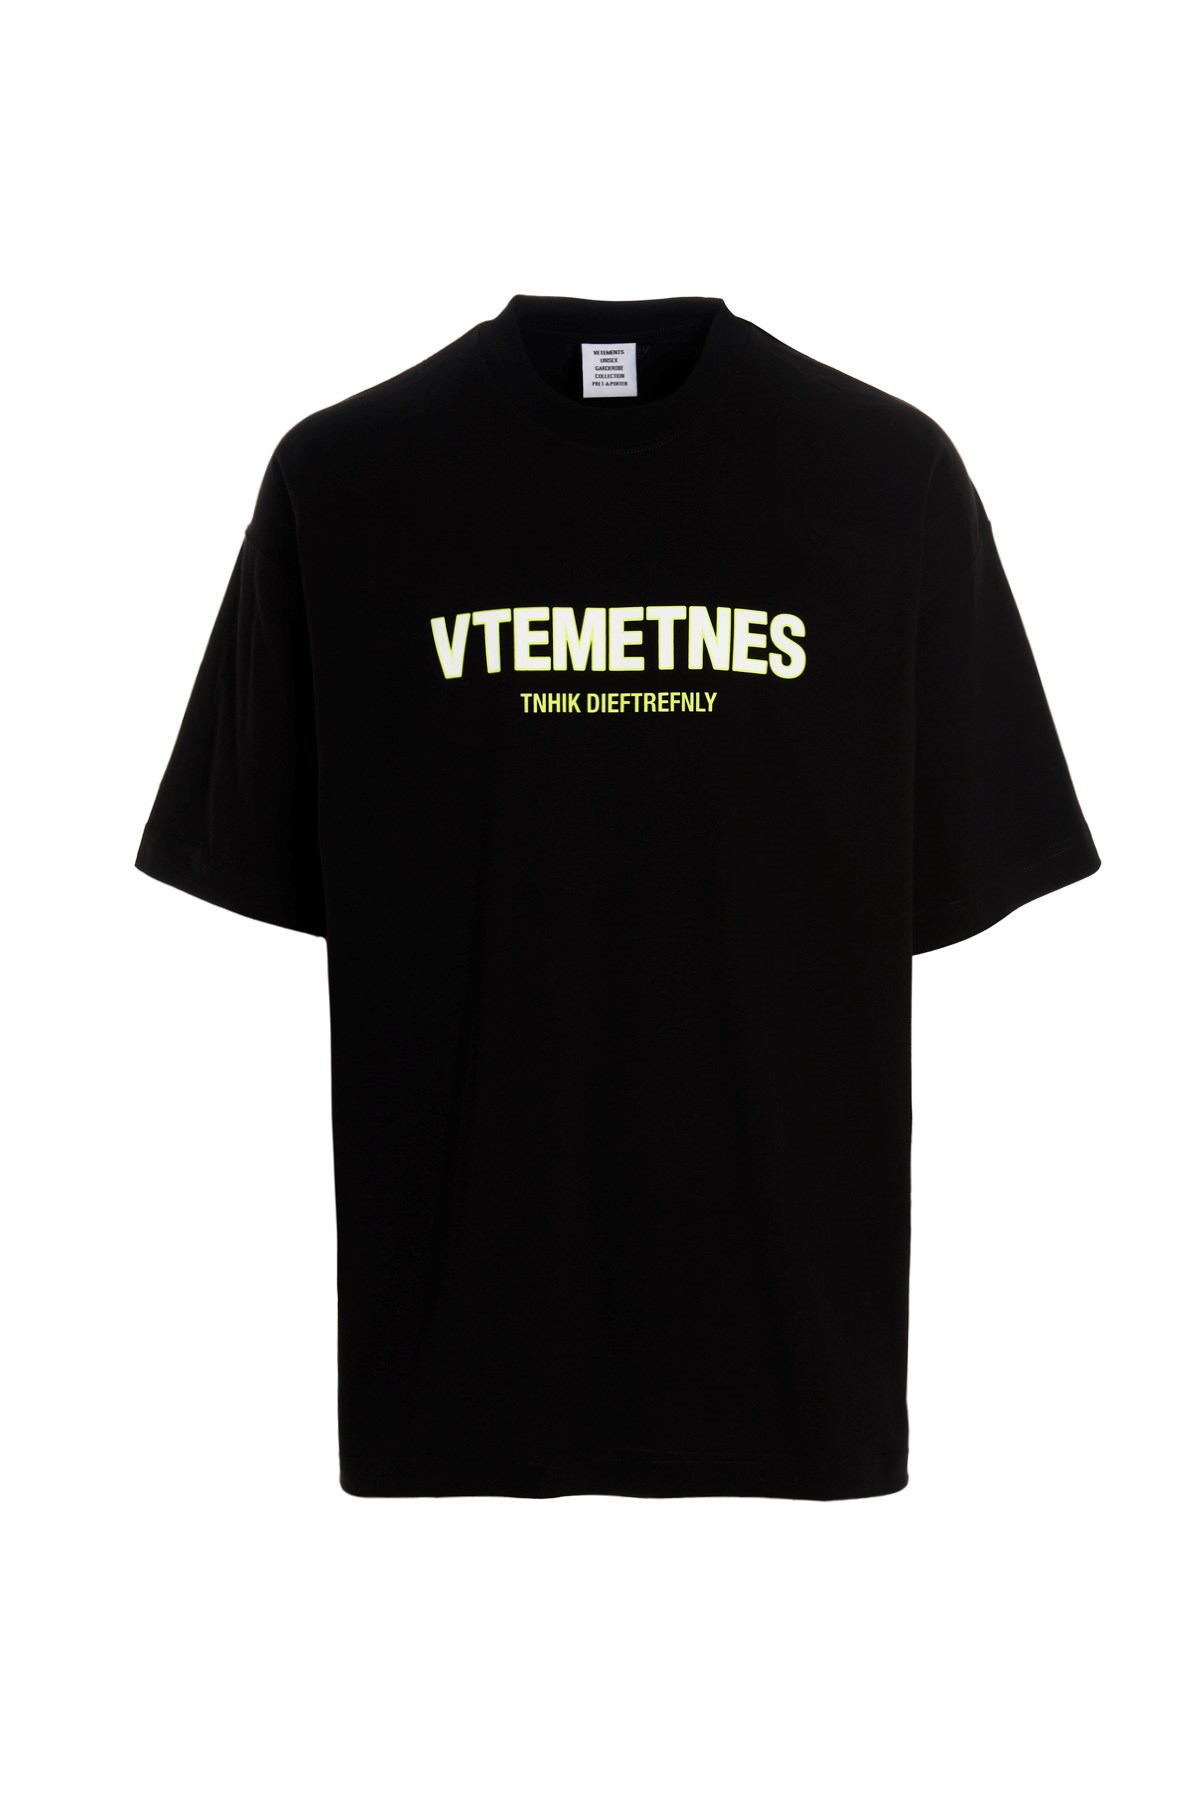 VETEMENTS T-Shirt 'Vtemetnes'